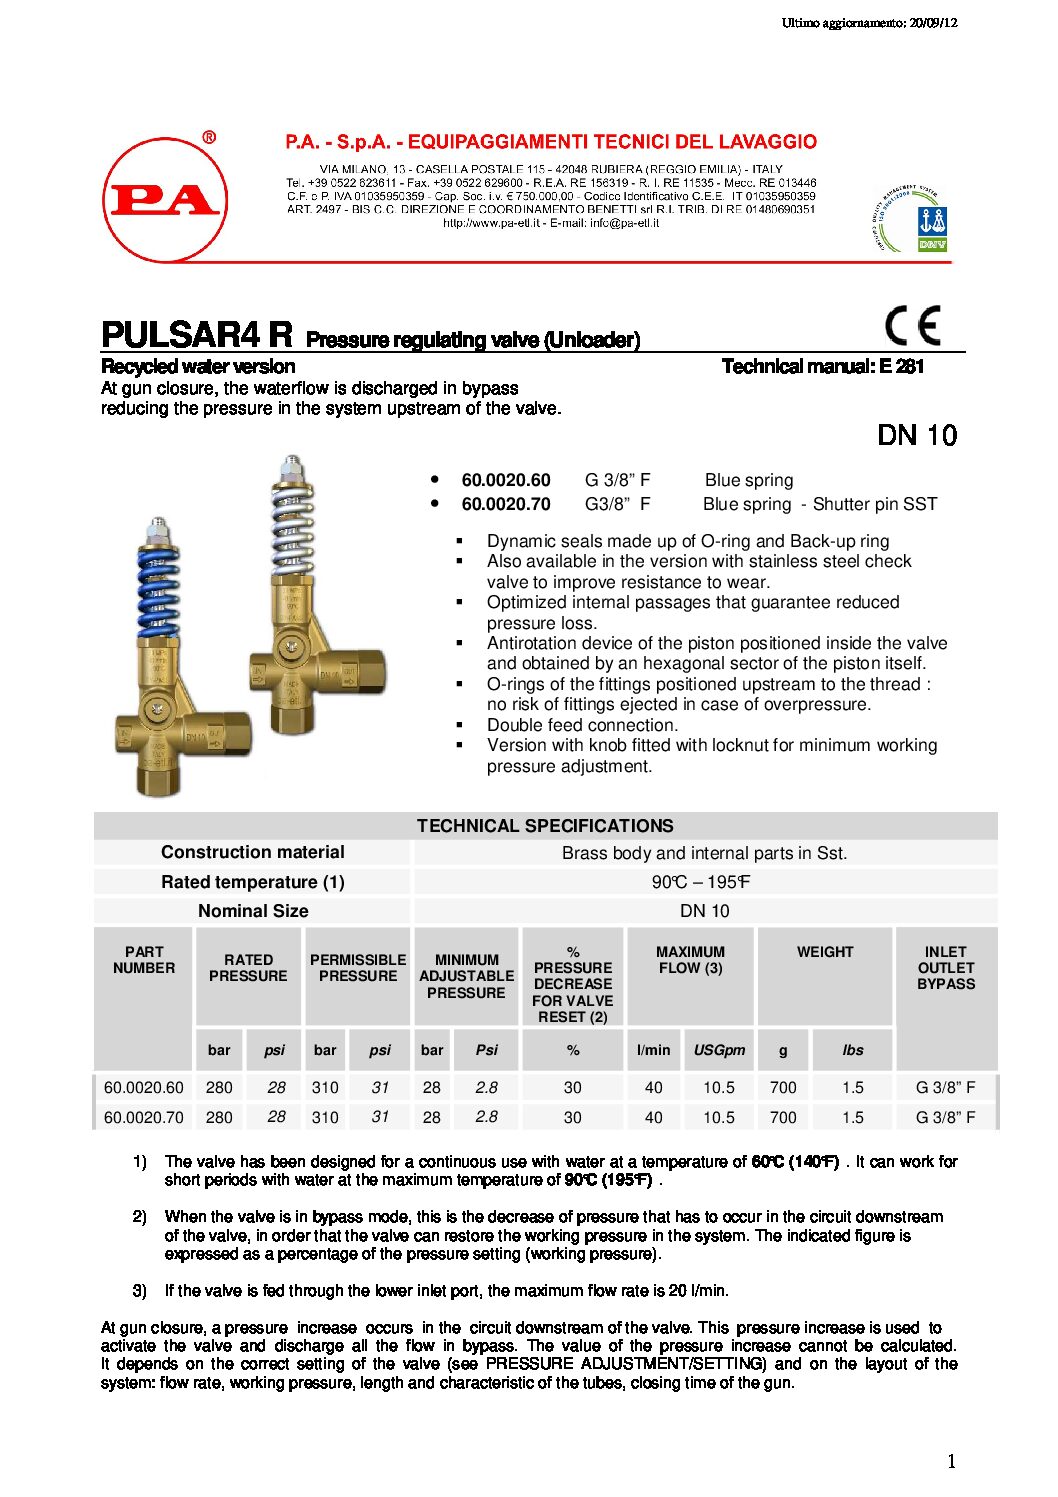 PA Pulsar 4 R Unloader valve technical manual